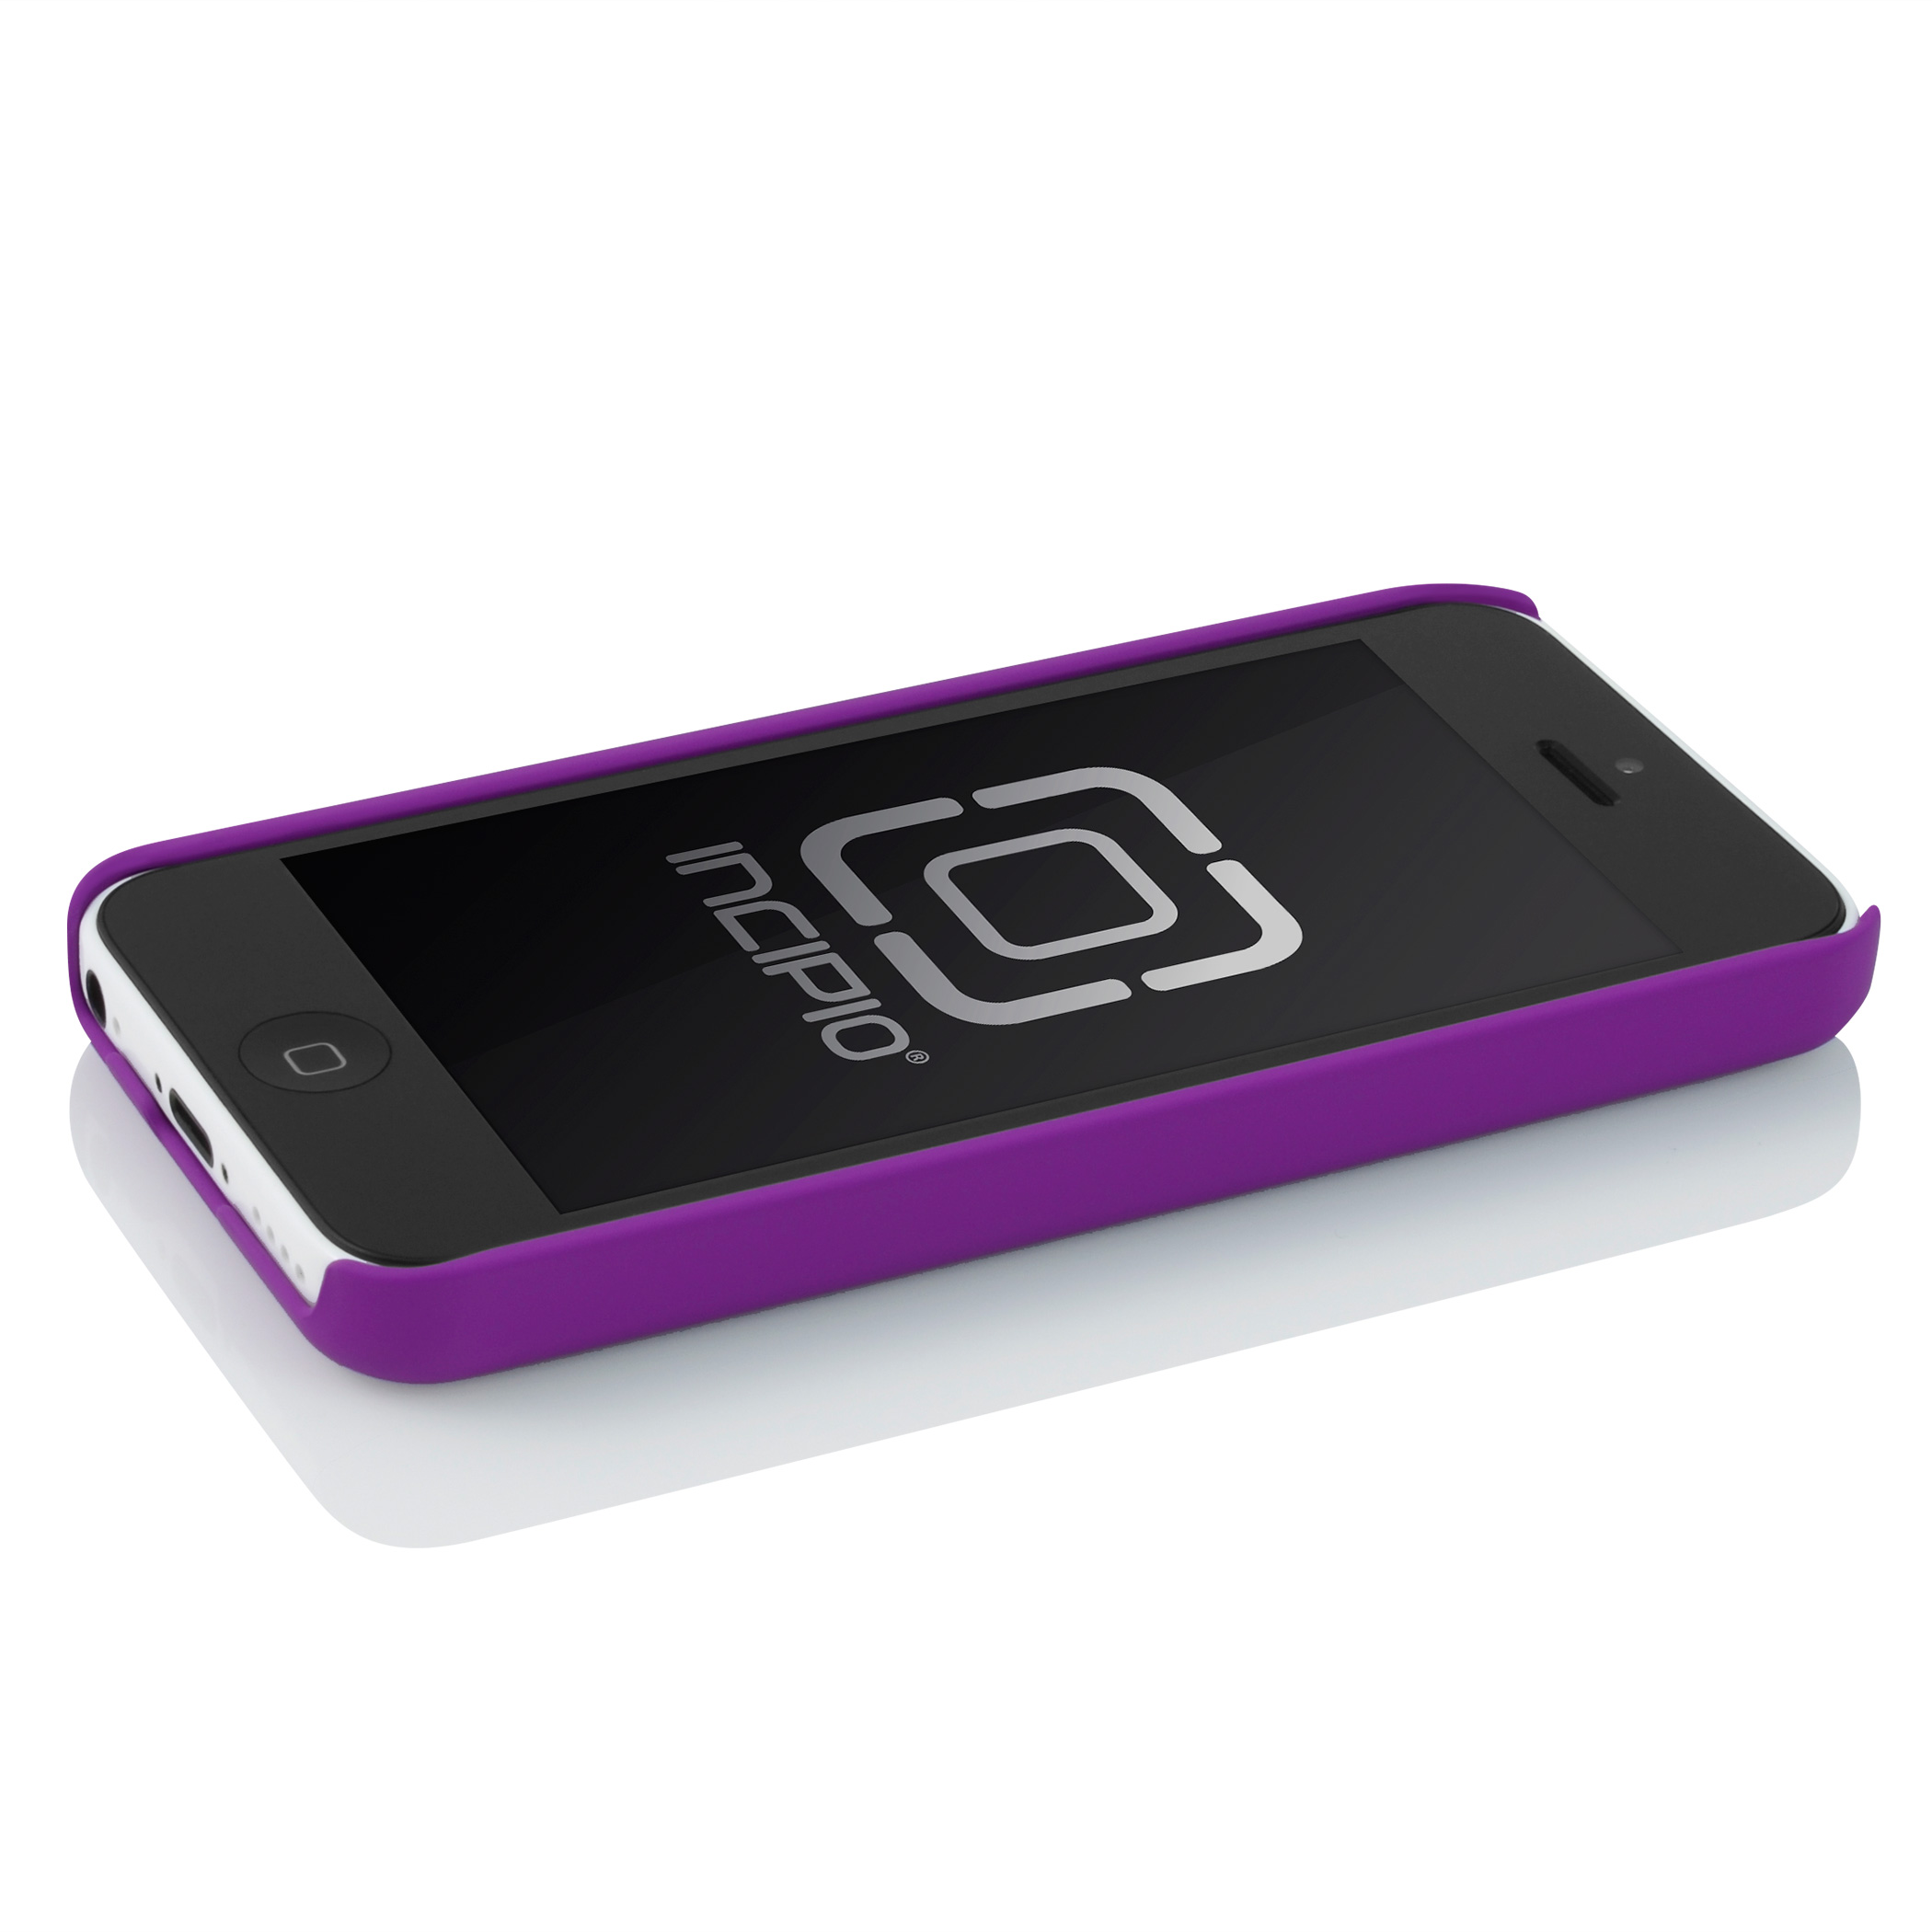 Incipio iPhone 5C Feather Shine Case - Purple